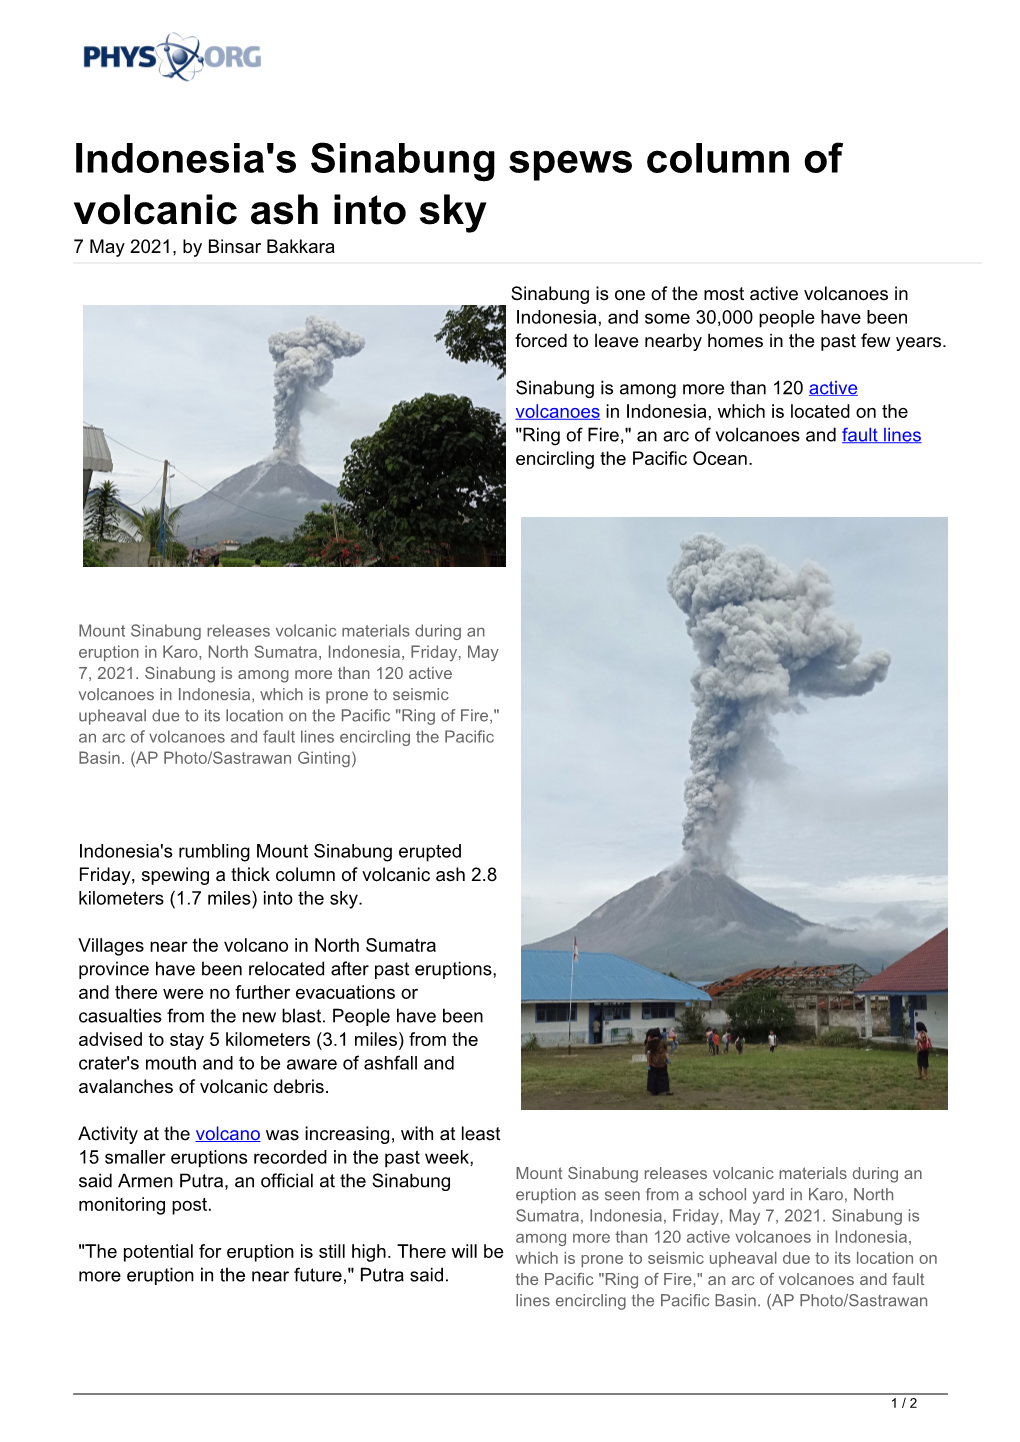 Indonesia's Sinabung Spews Column of Volcanic Ash Into Sky 7 May 2021, by Binsar Bakkara